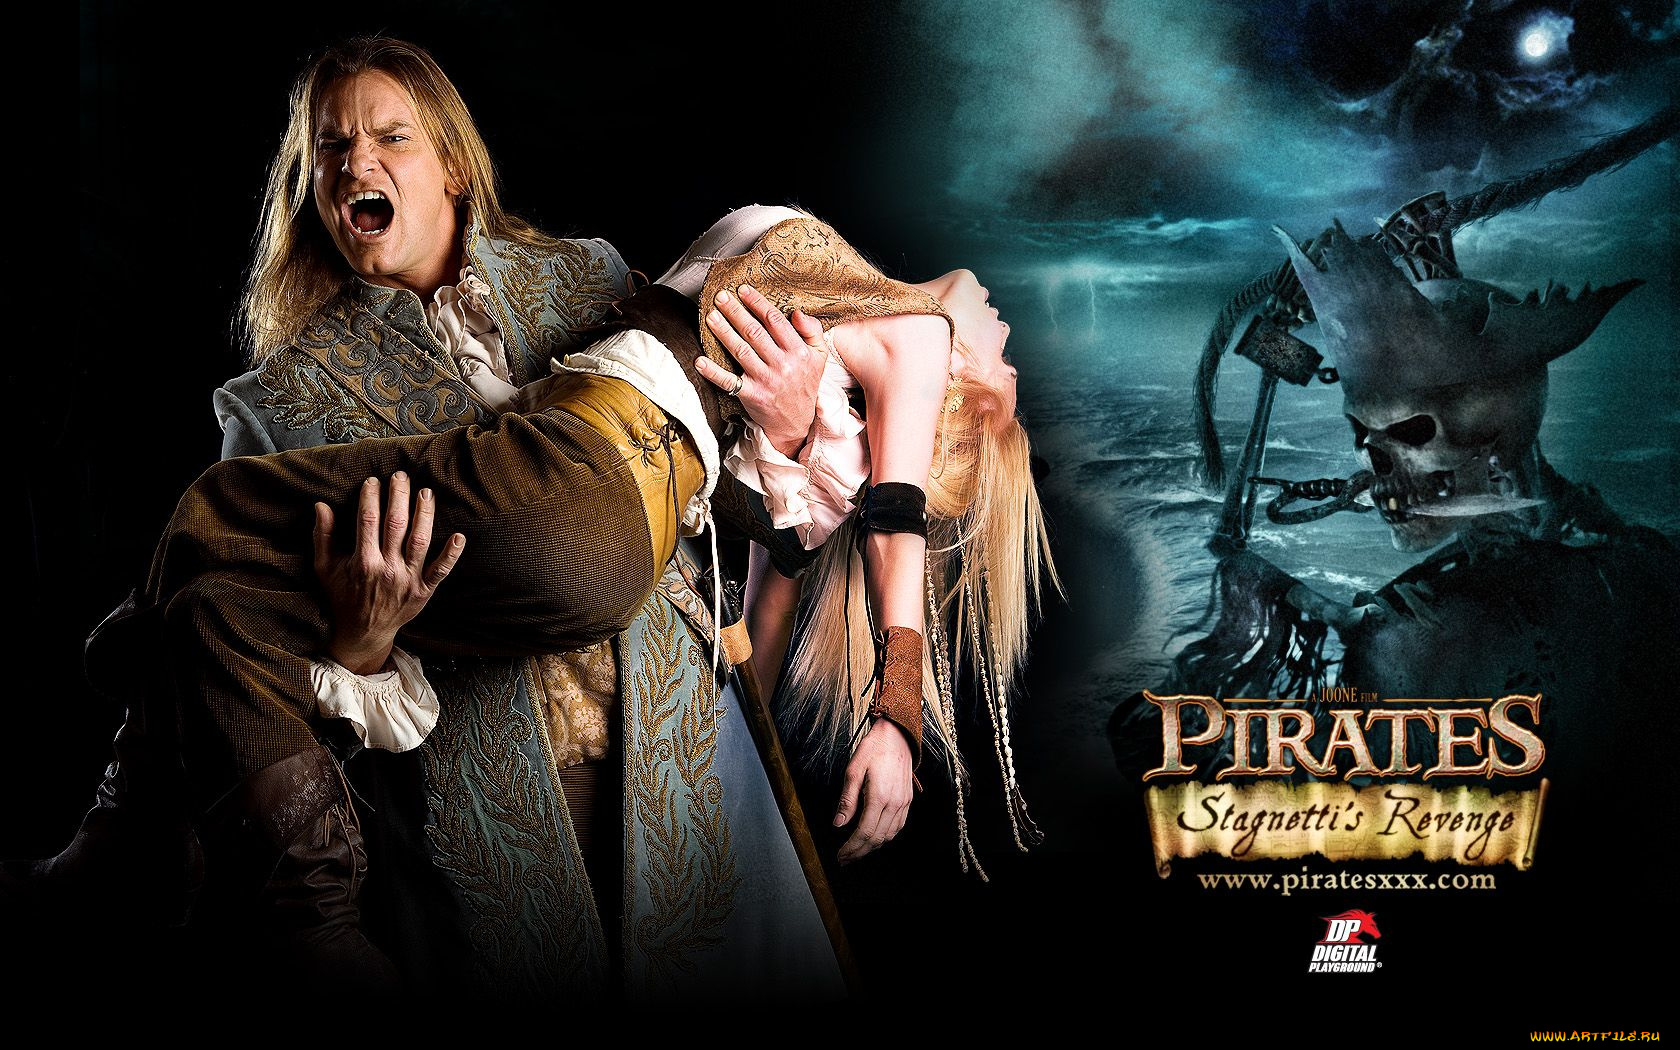 Pirates stagnettis revenge 2 watch online